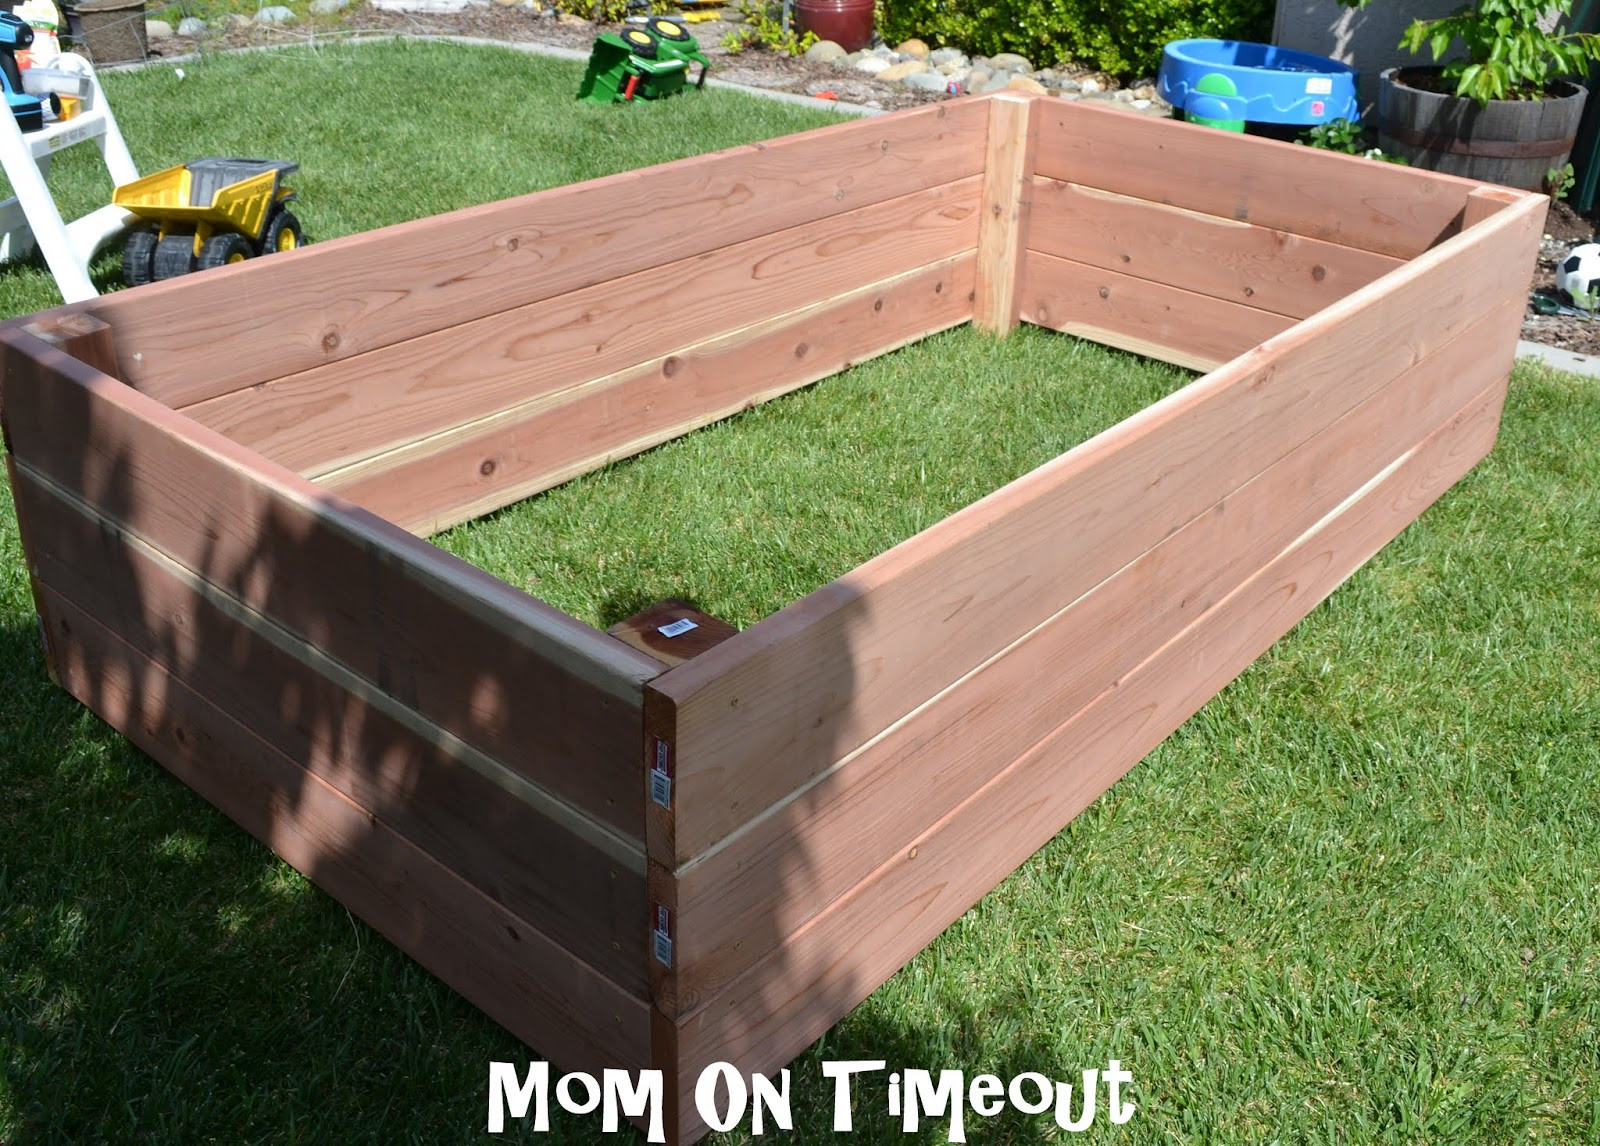 Best ideas about DIY Planter Boxes
. Save or Pin DIY Garden Planter Box Tutorial Now.